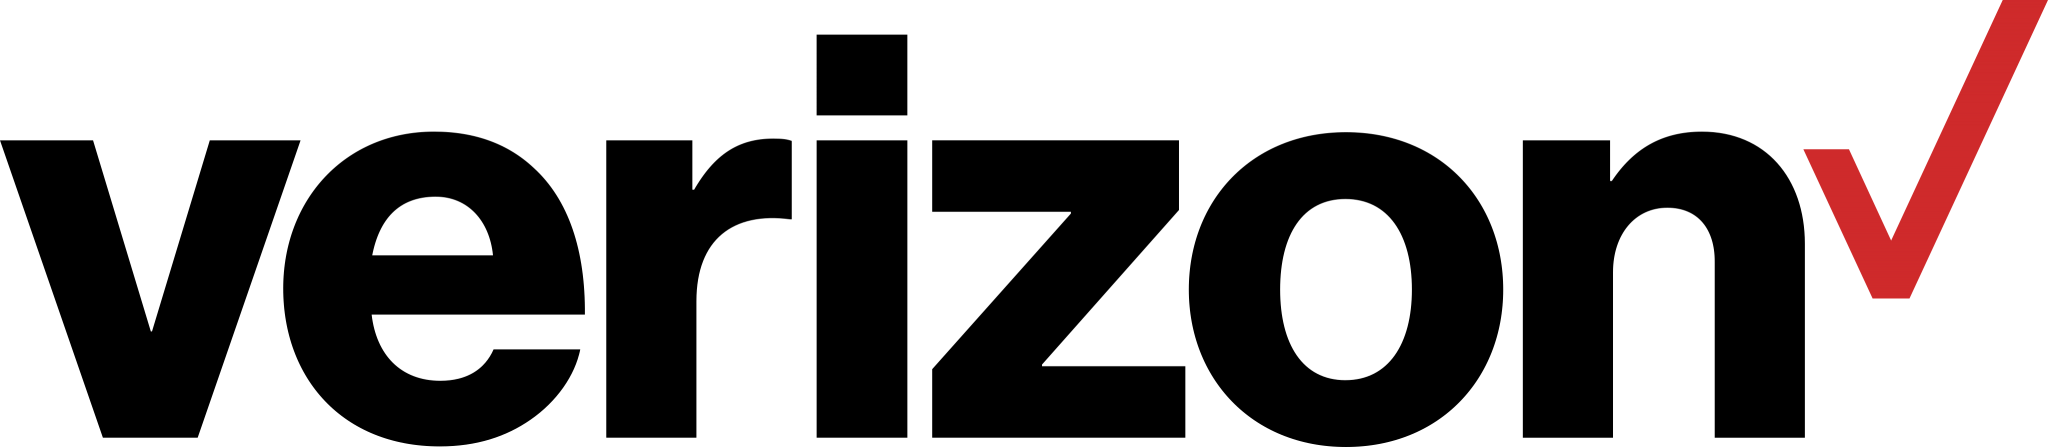 verizon logo black and white